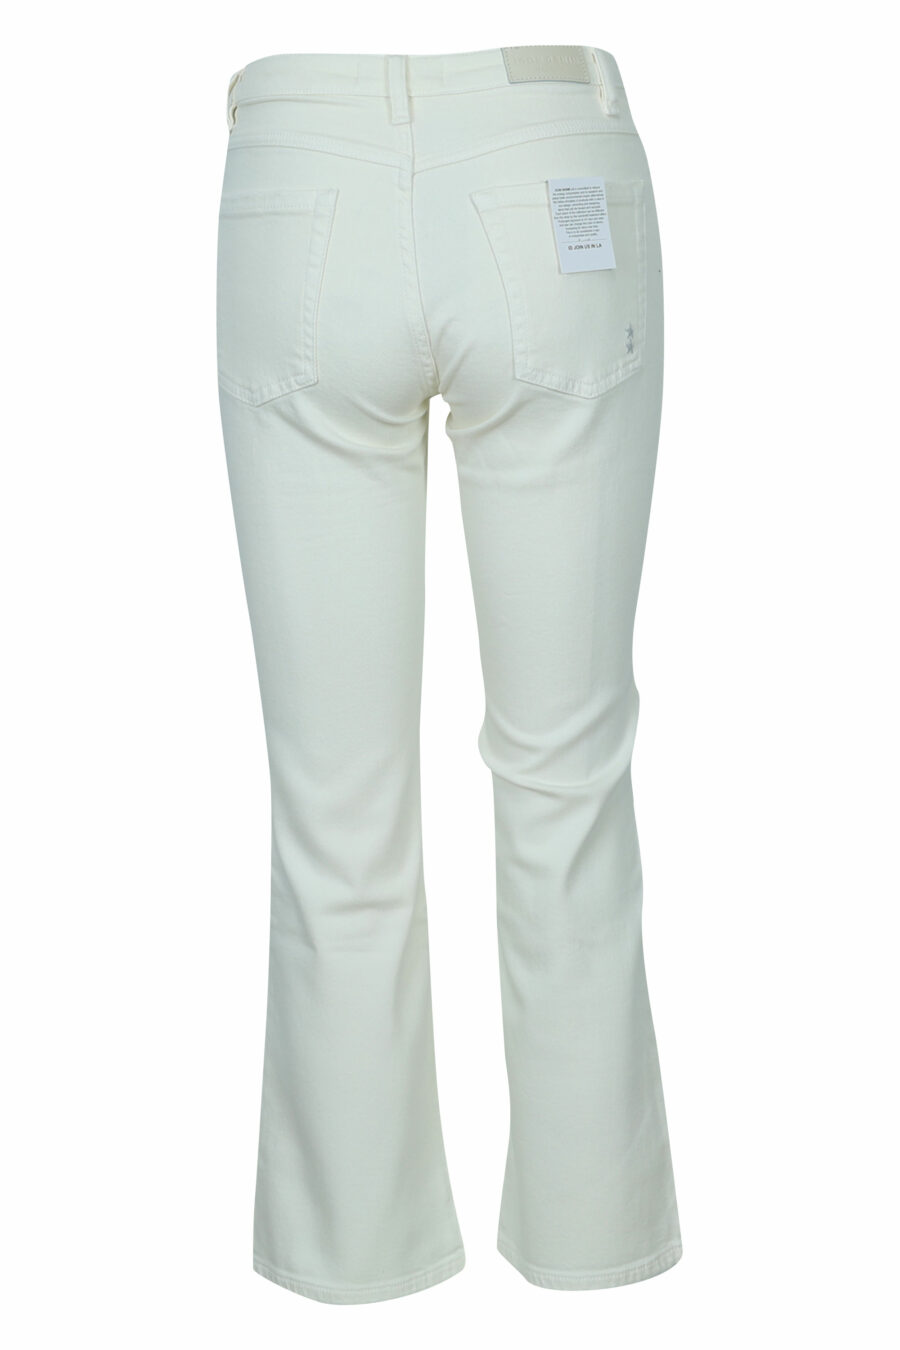 Pantalon "Pam" blanc crème avec botte large - 8059772787895 1